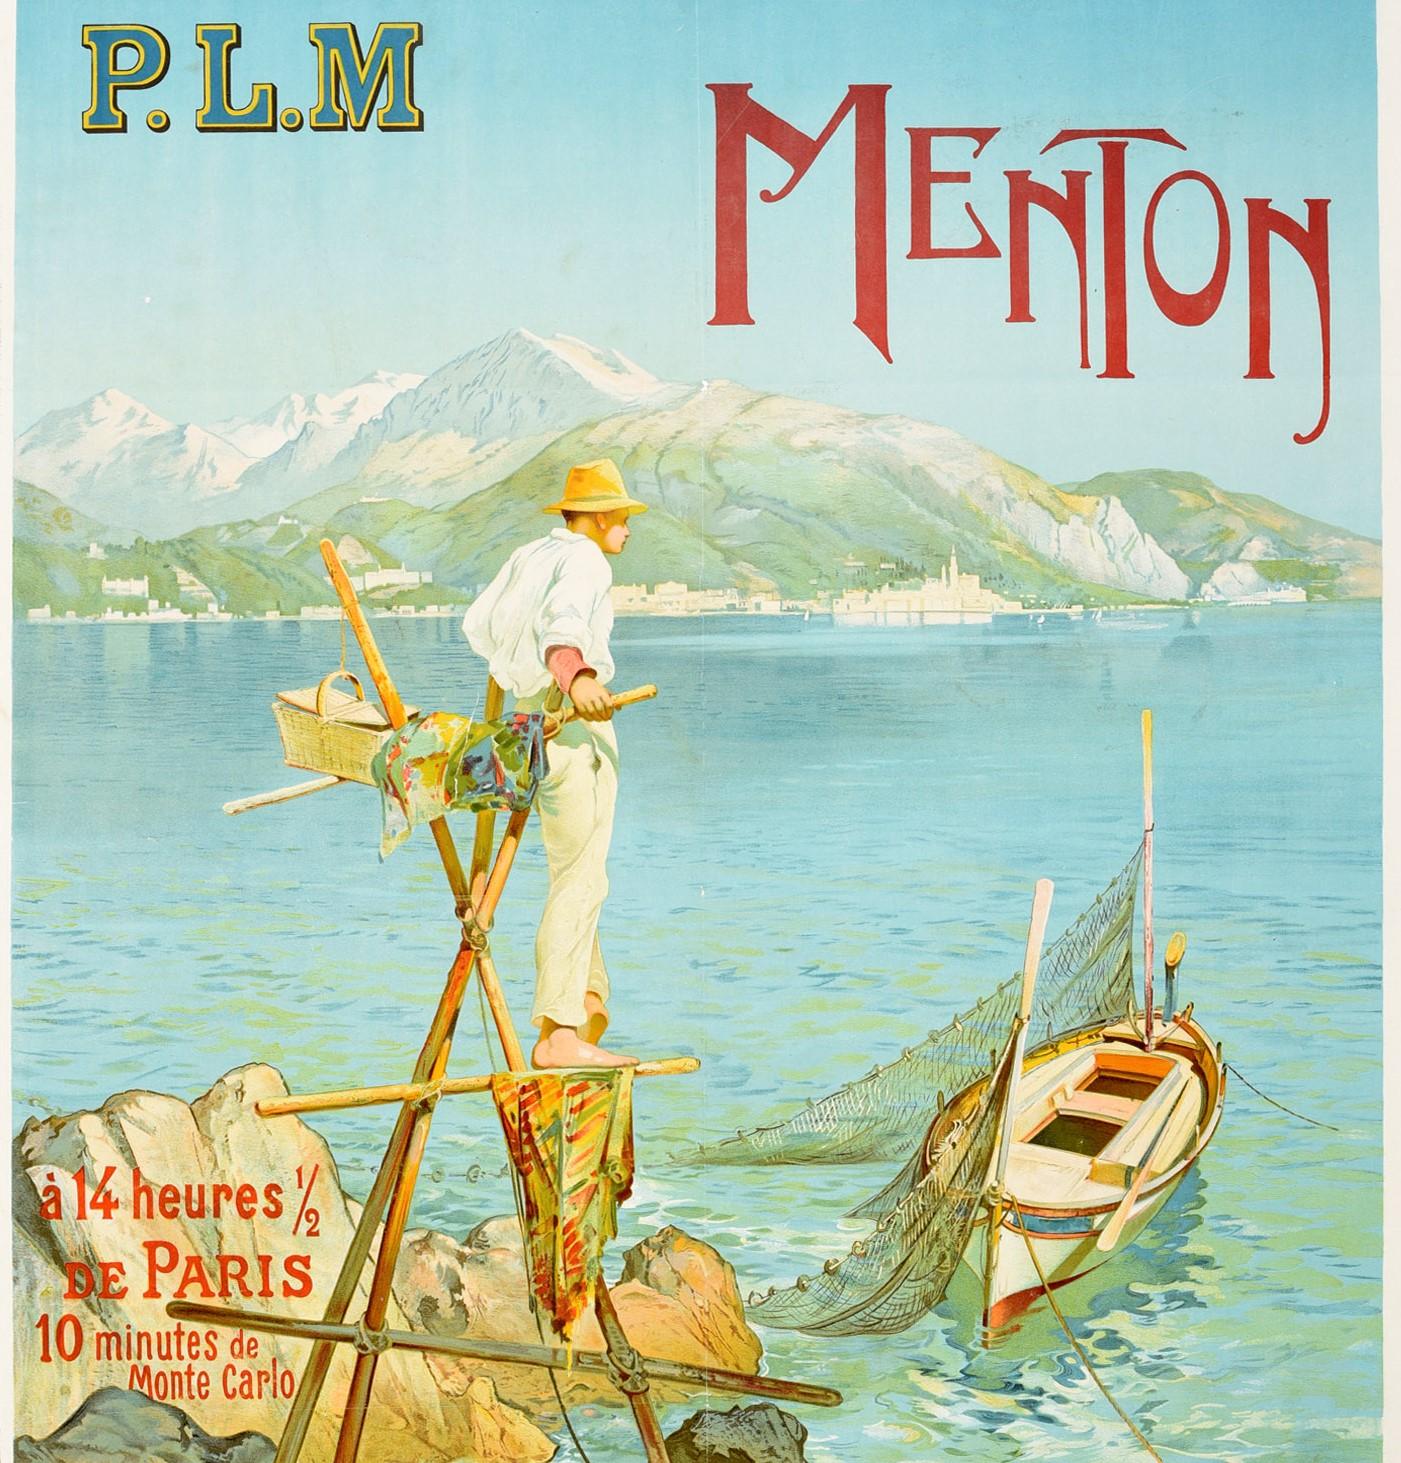 French Original Antique Poster Menton Paris Lyon Mediterranee PLM Railway Travel France